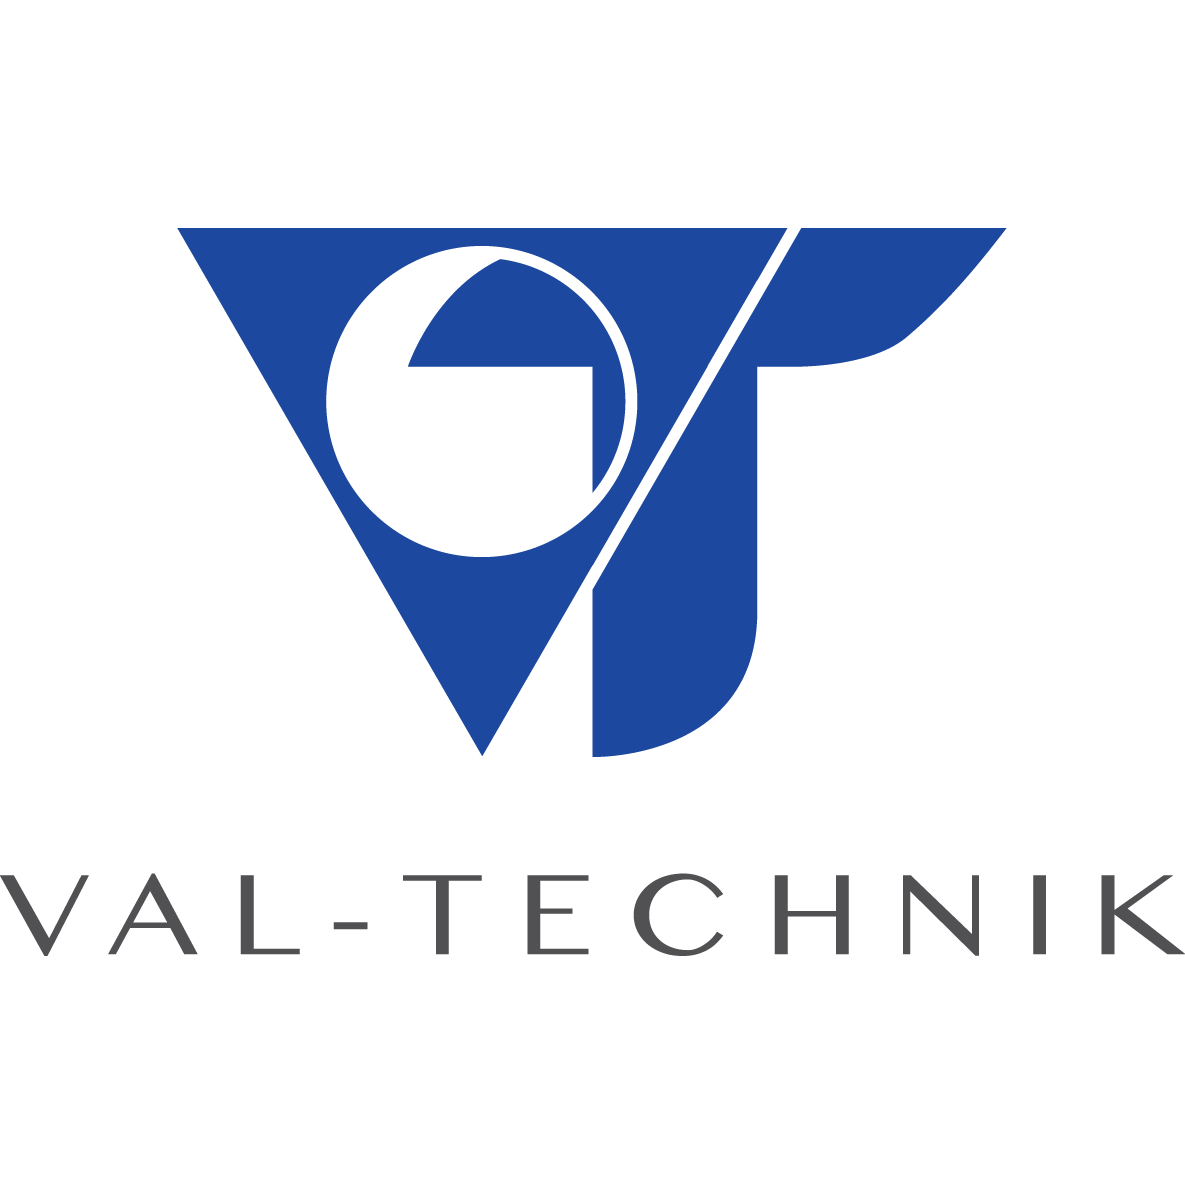 Val-technik Pte Ltd